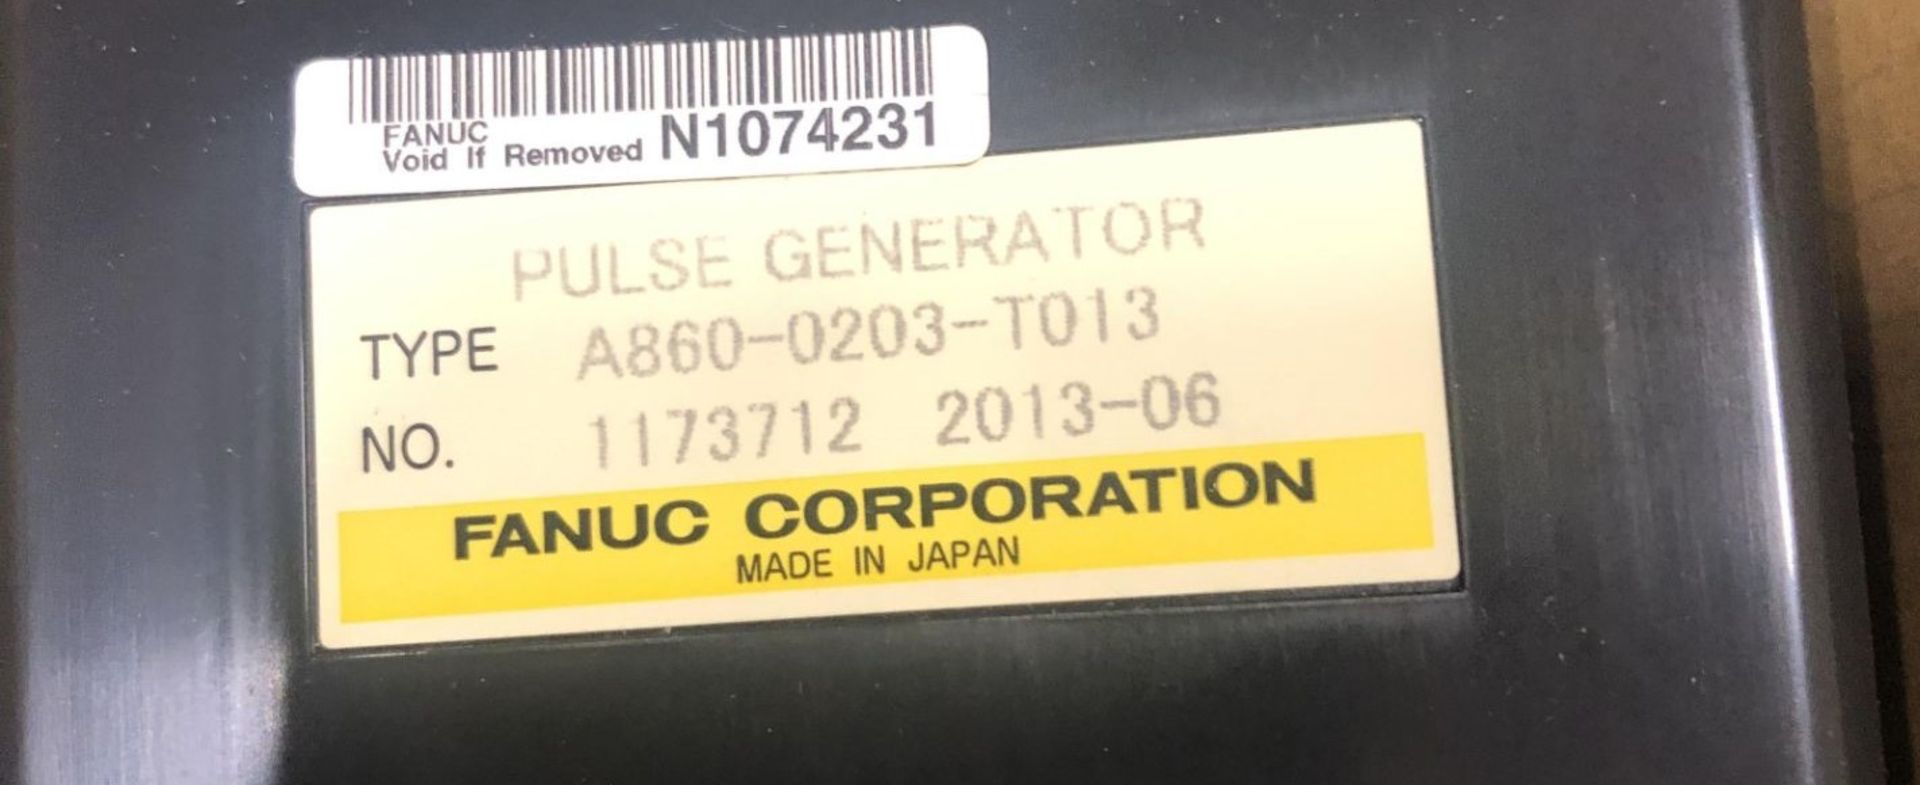 NEW IN BOX Fanuc Pulse Generator Unit, A860-0203-T013 - Image 4 of 4